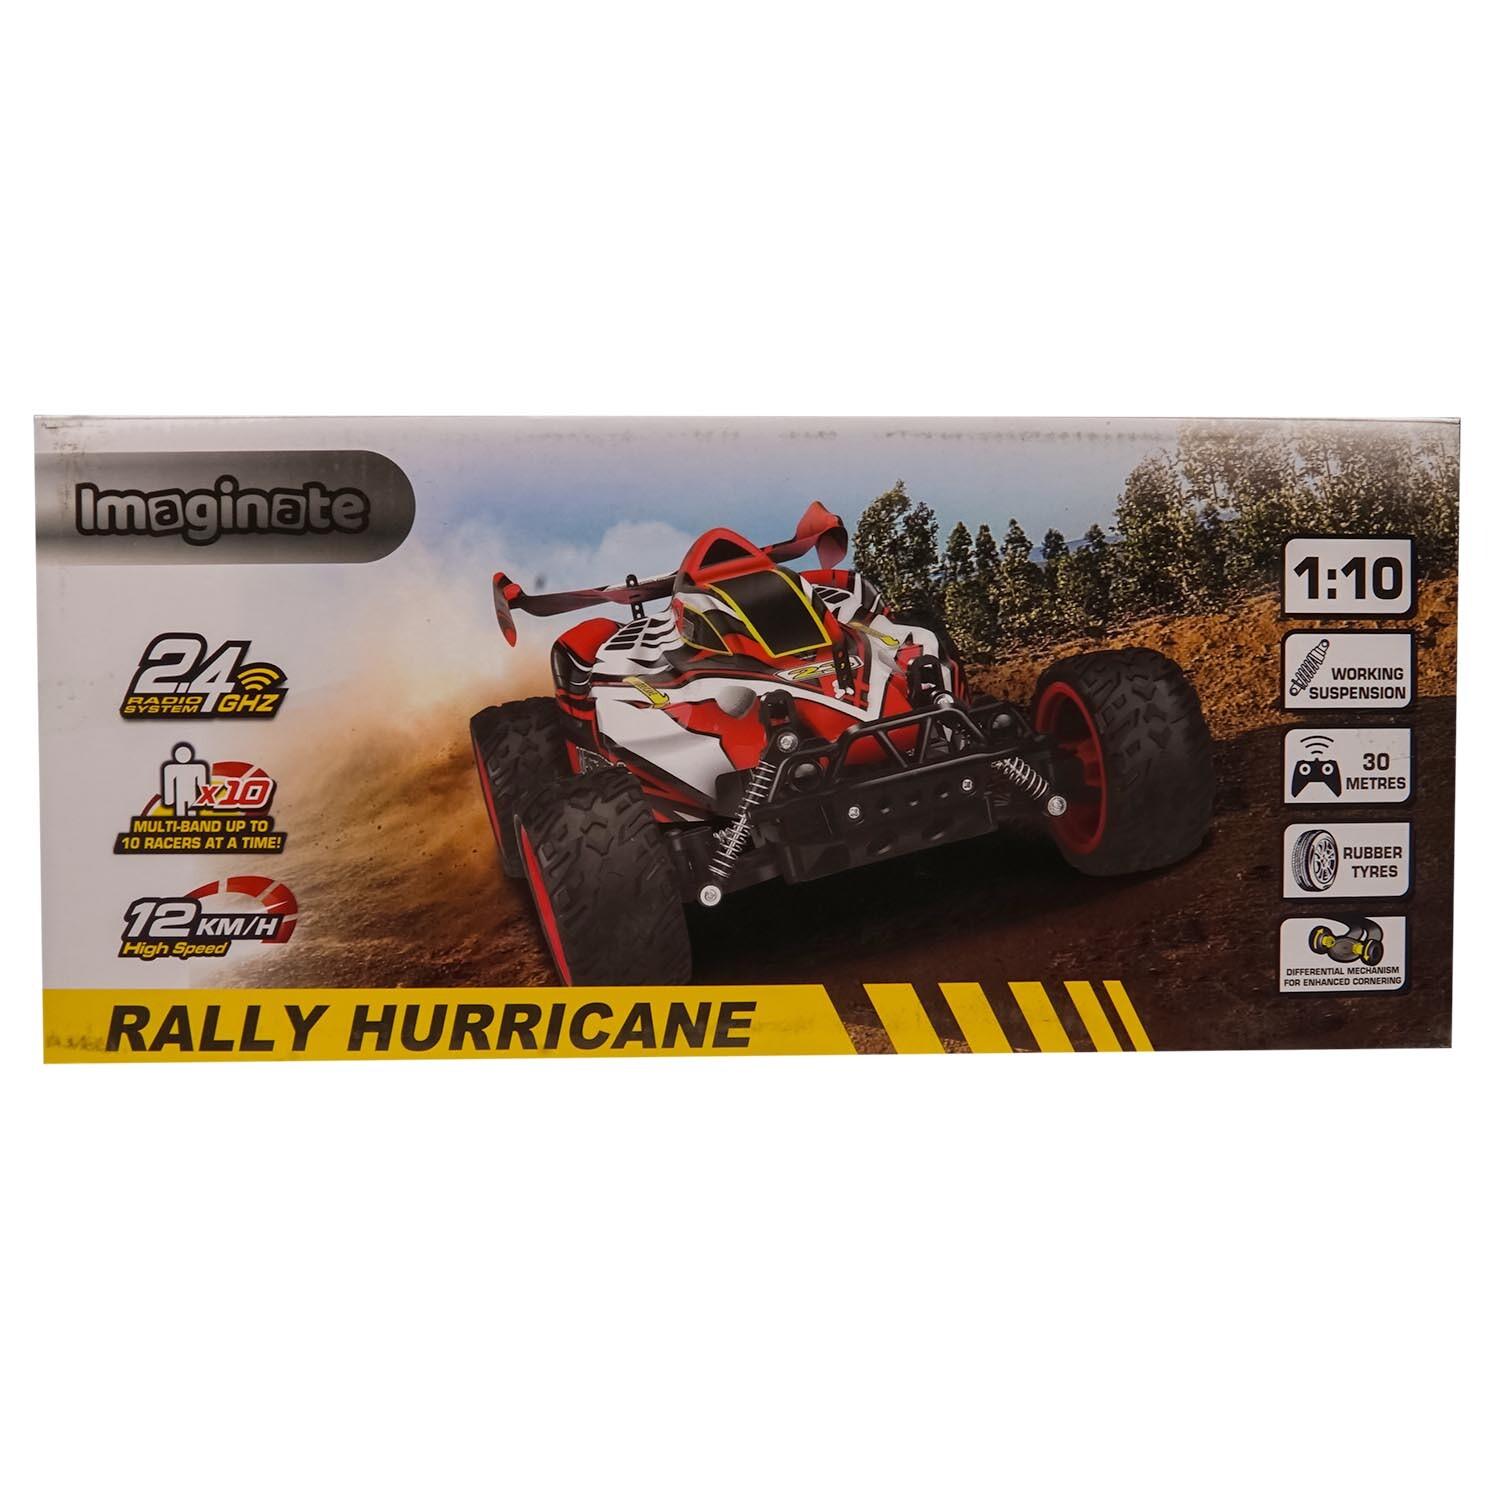 Imaginate Rally Hurricane Racer Image 4